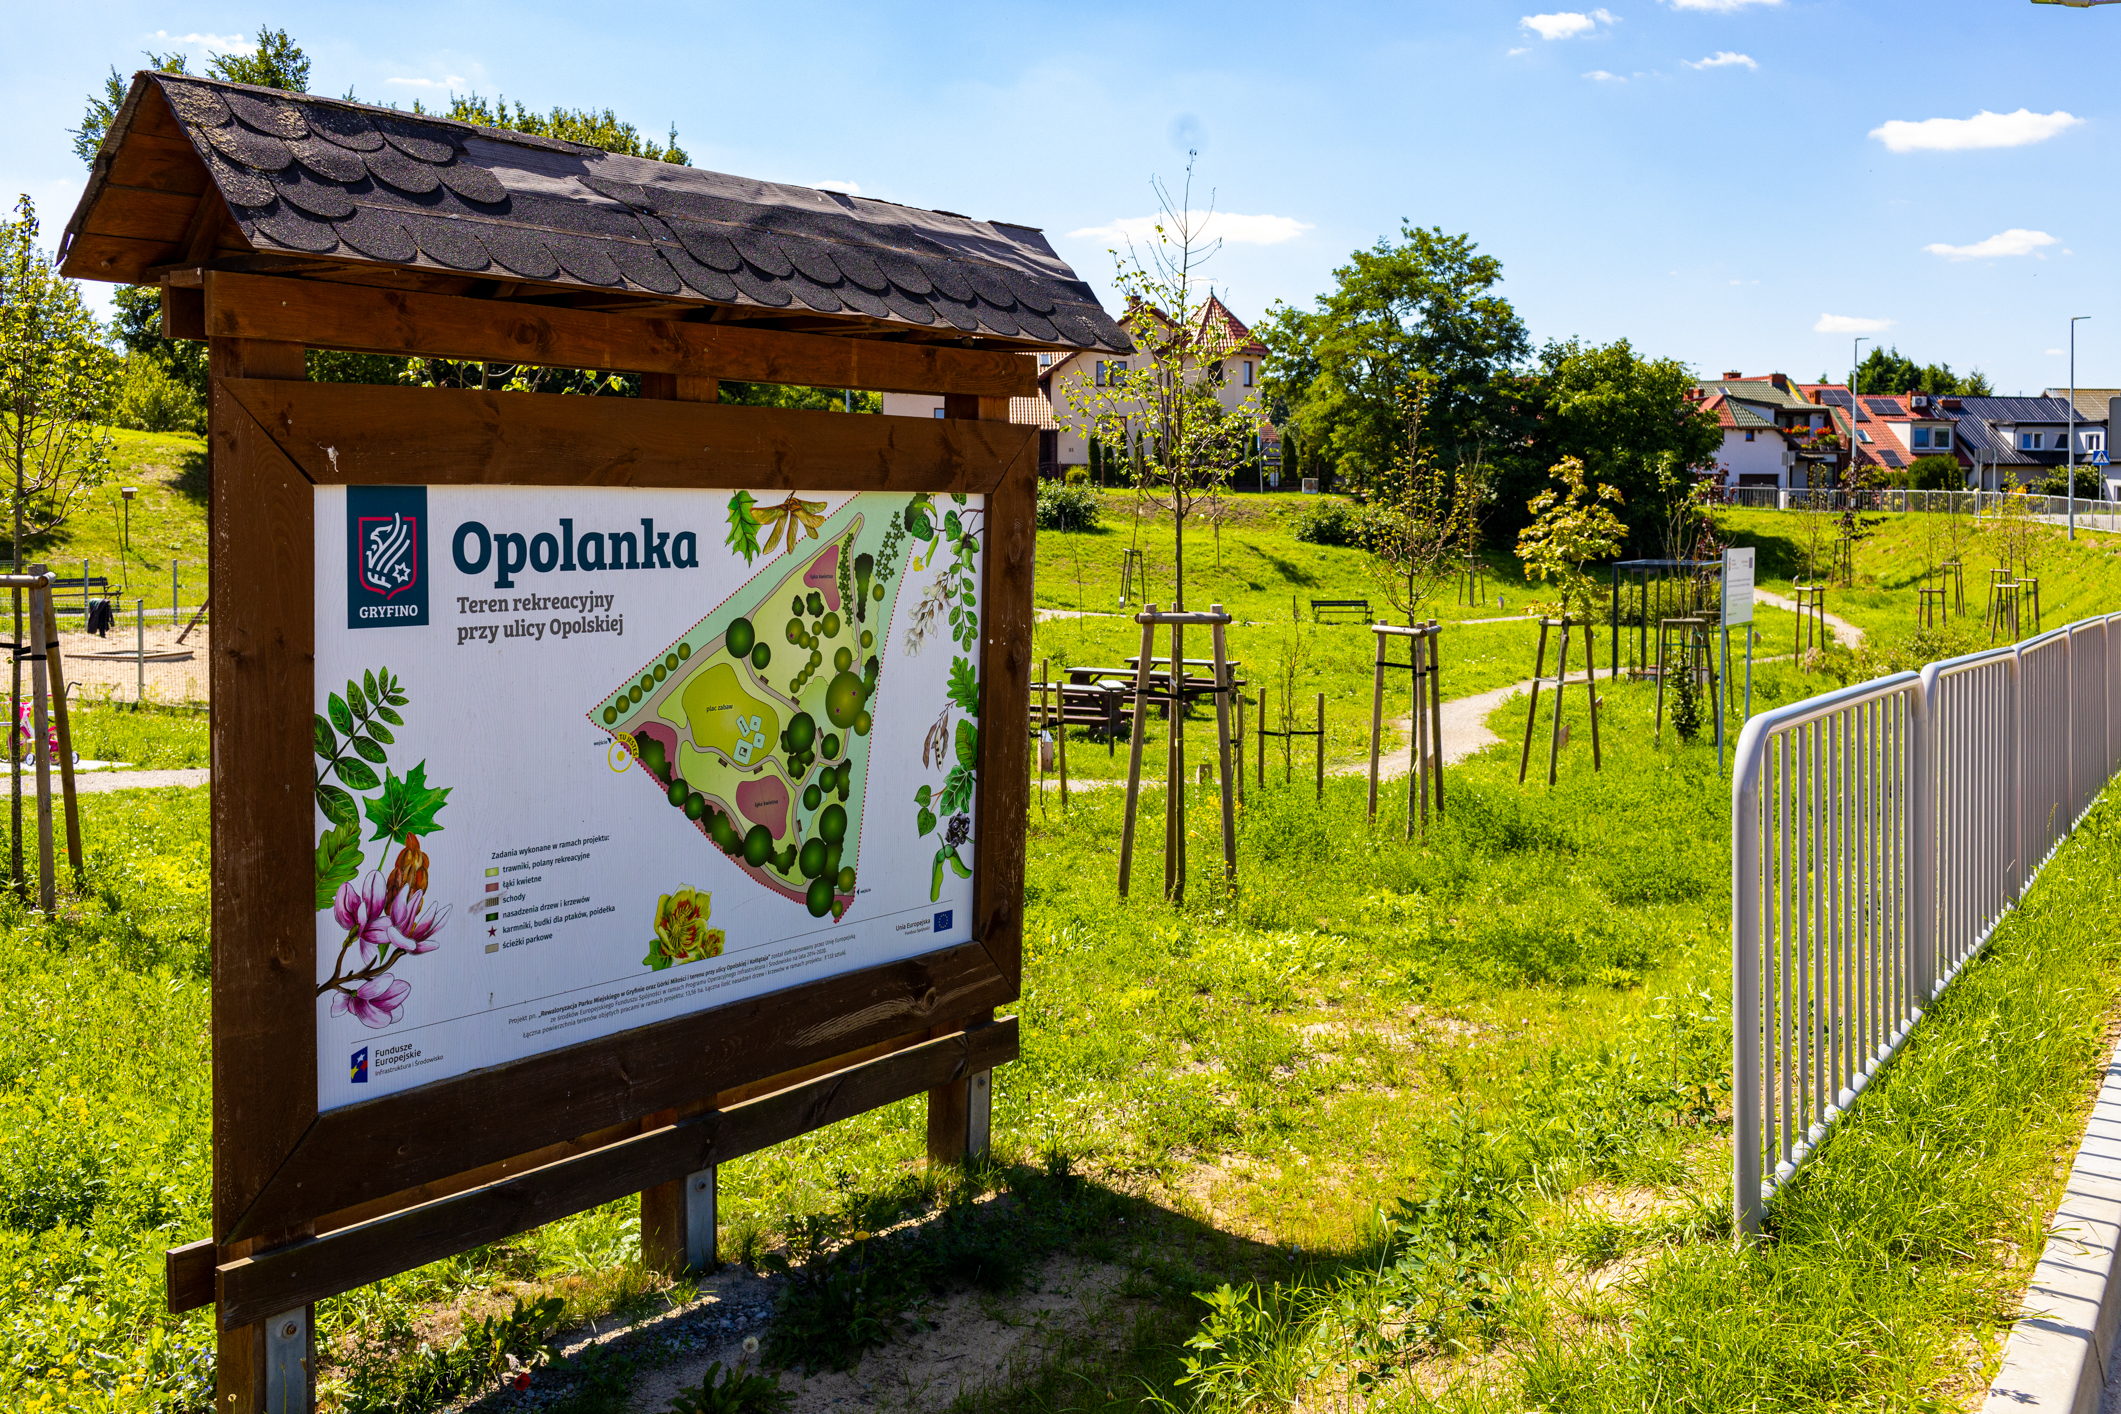 Development of the “Opolanka” recreational area